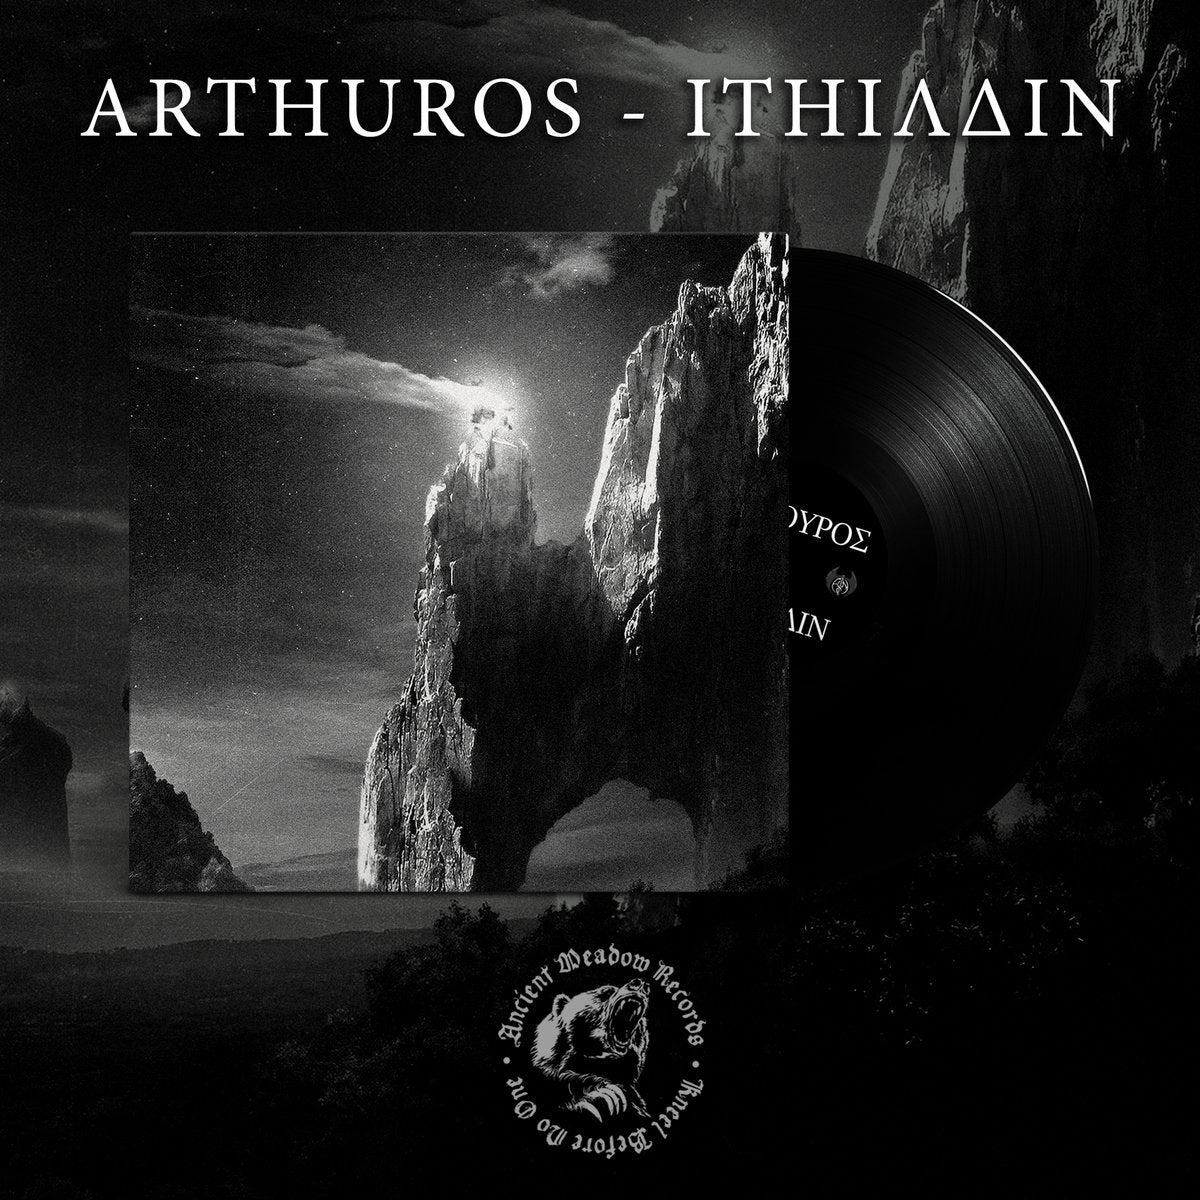 [SOLD OUT] ARTHUROS "Ithildin" vinyl LP (Lim 100)